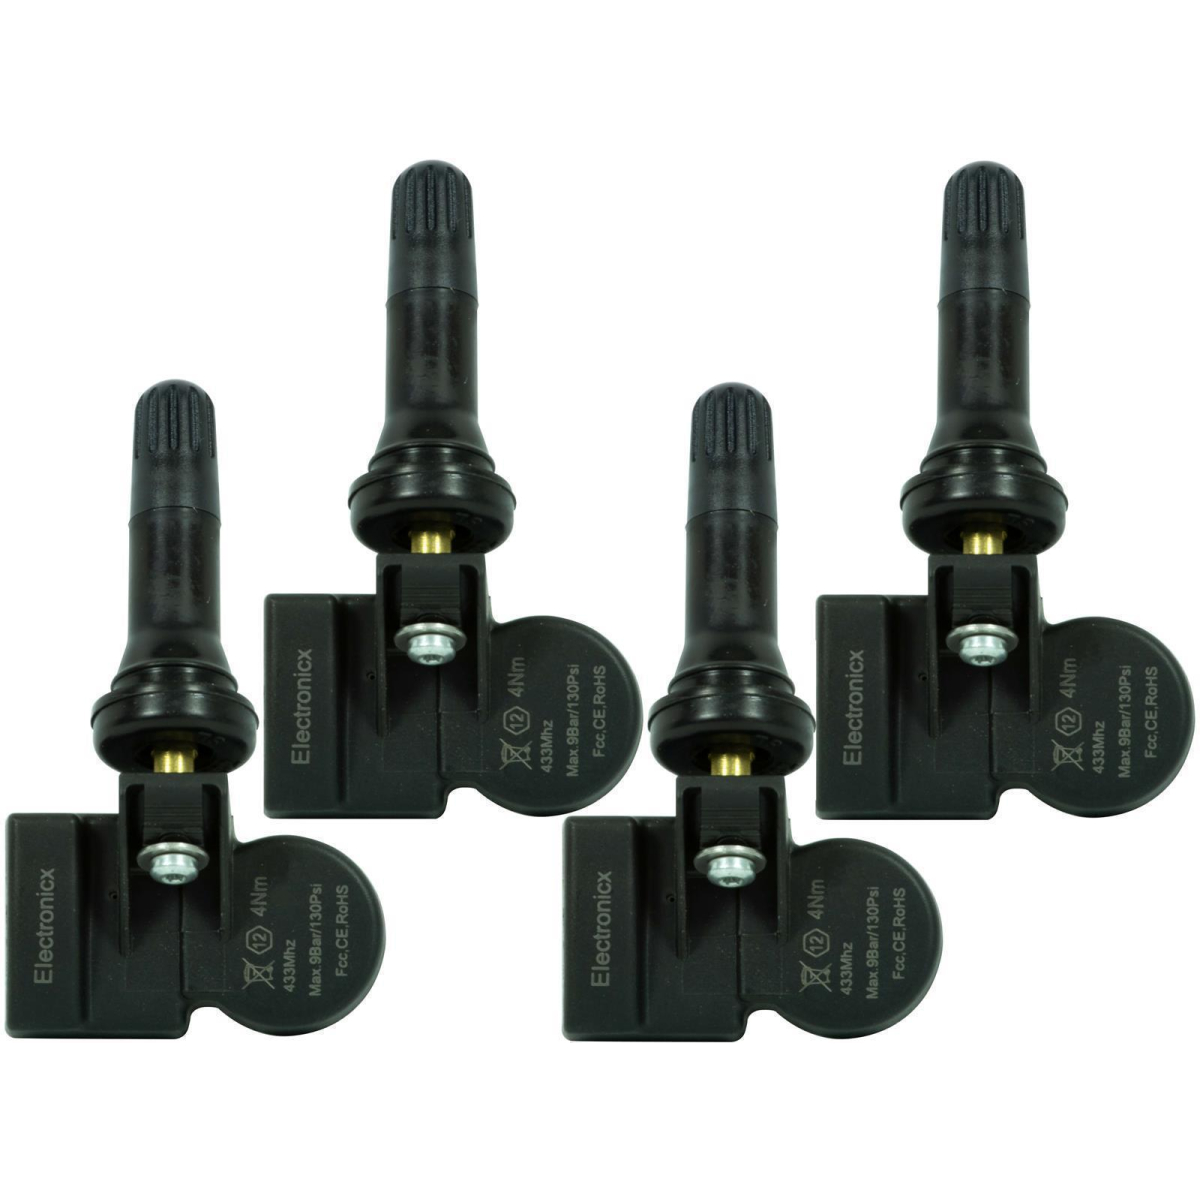 4x RDKS TPMS tire pressure sensors rubber valve for AUDI ALFA FERRARI 433 MHZ OE 224549